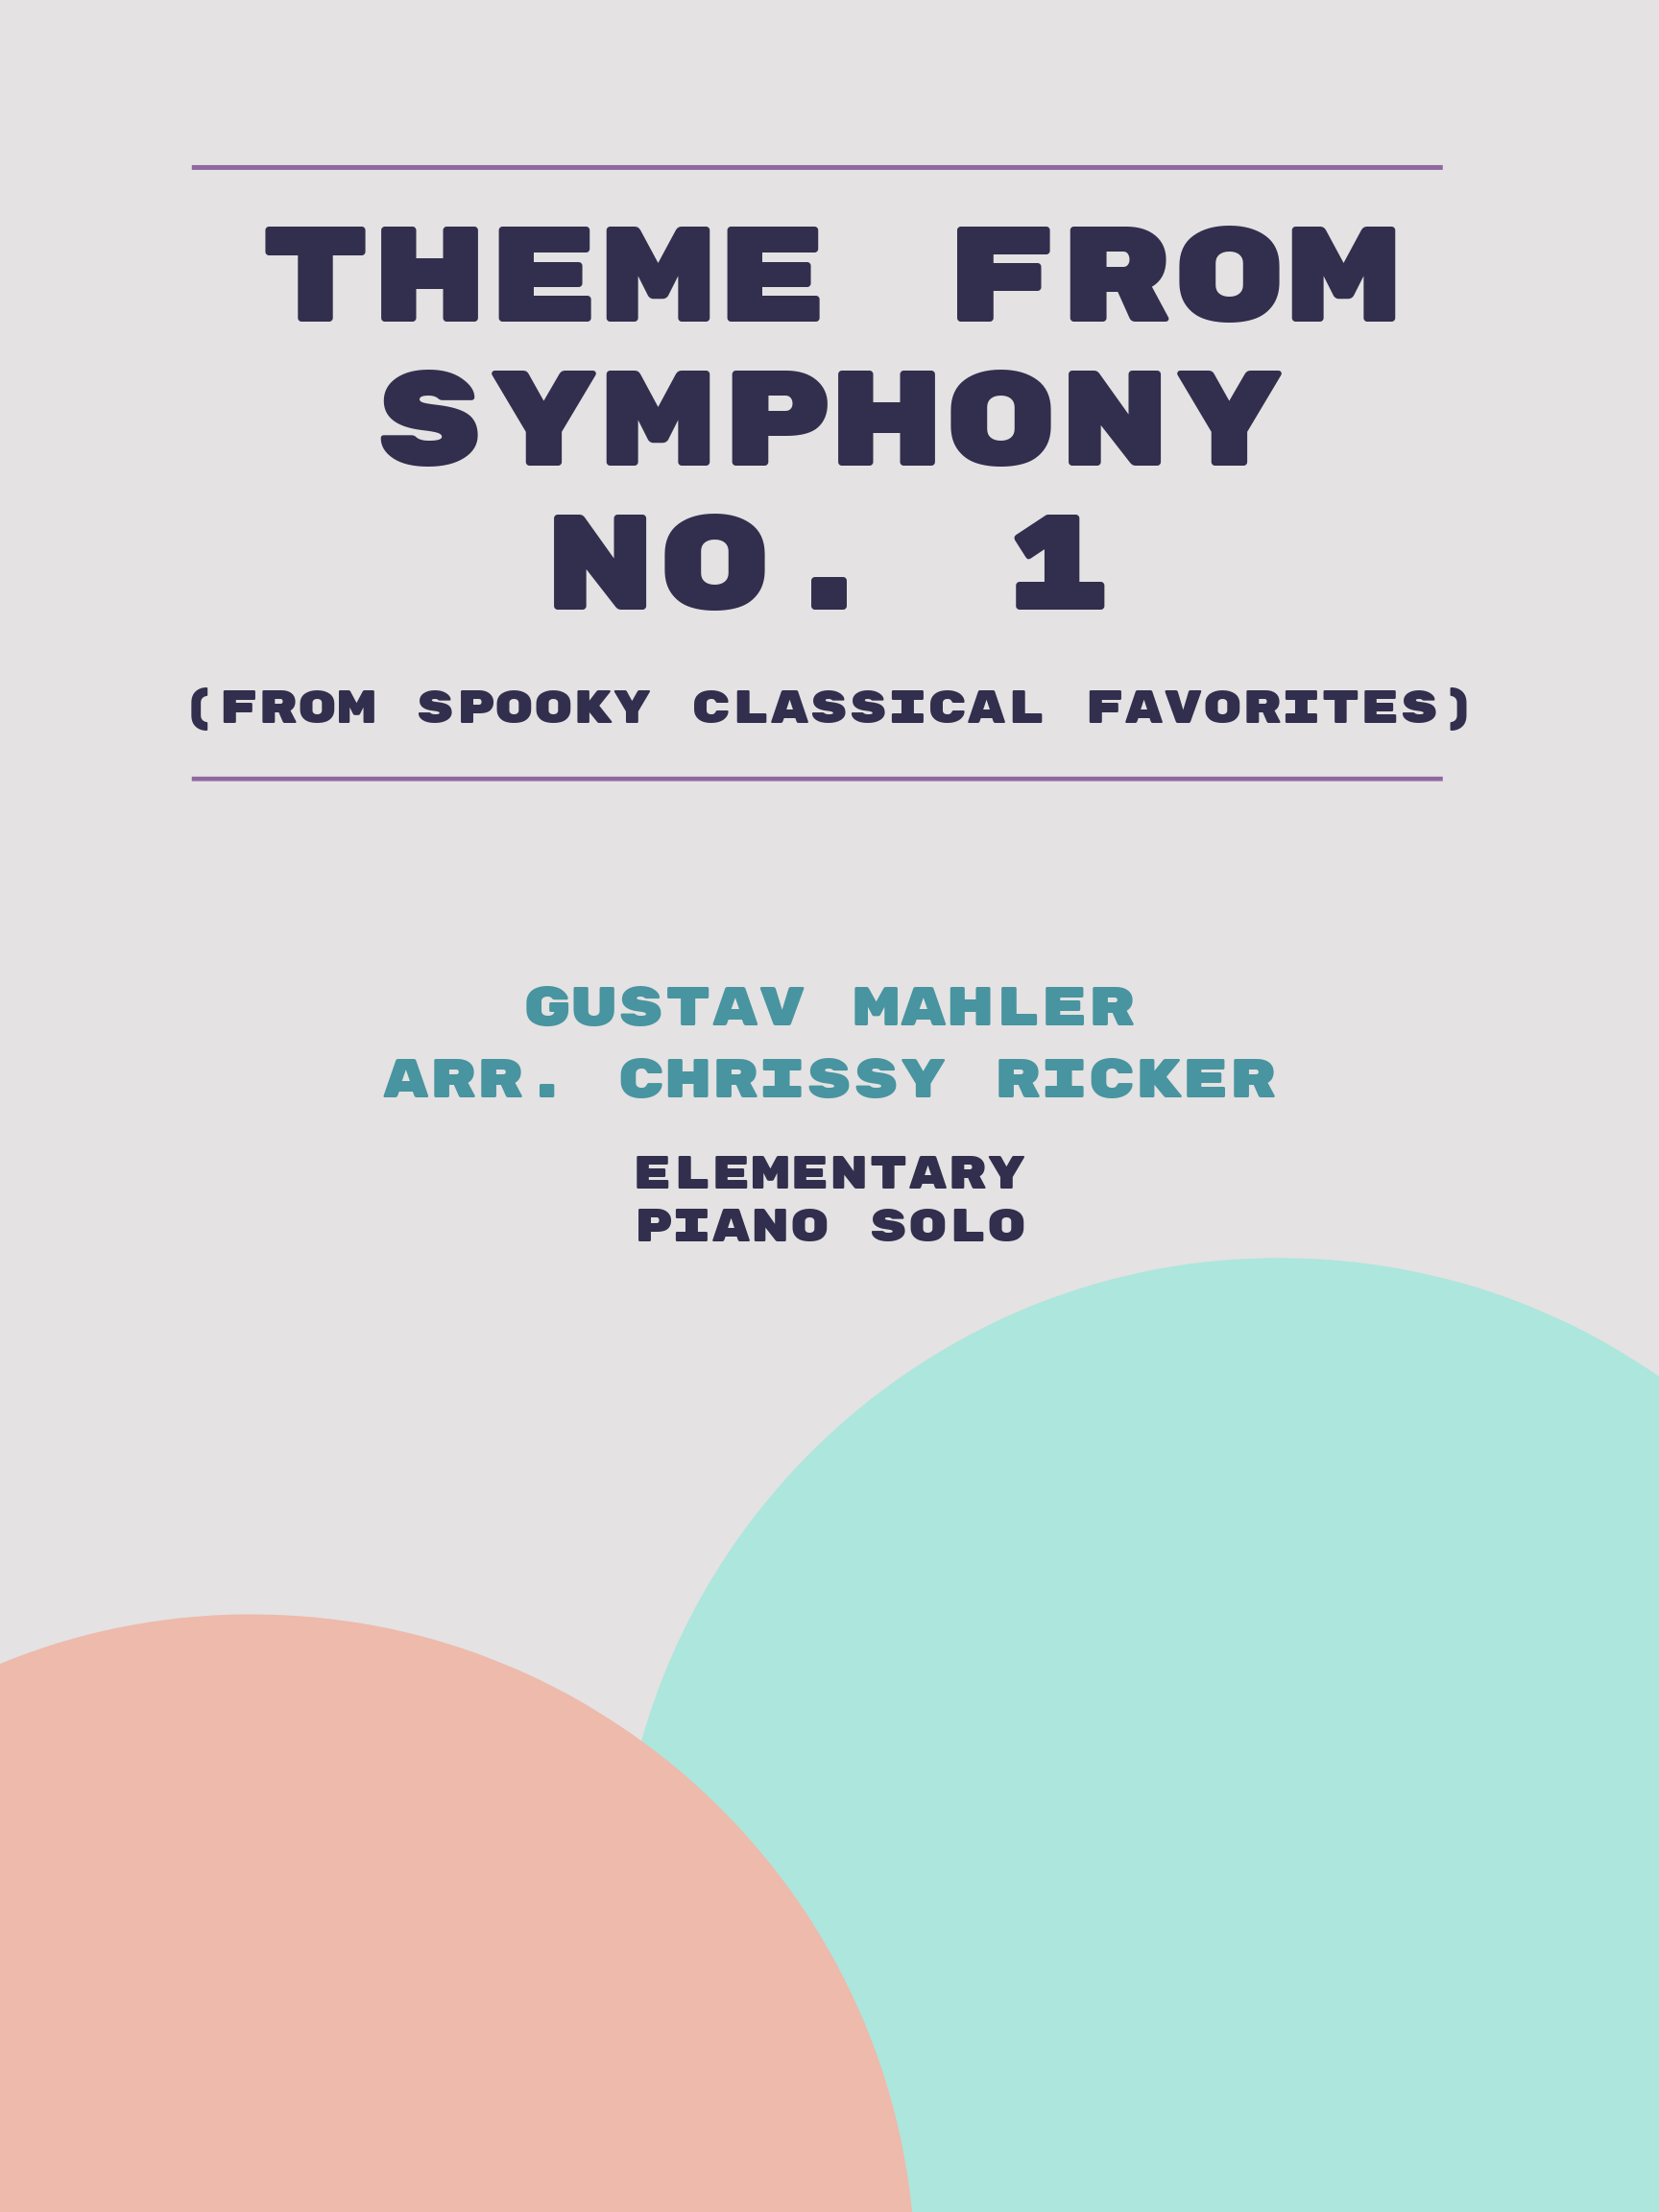 Theme from Symphony No. 1 by Gustav Mahler